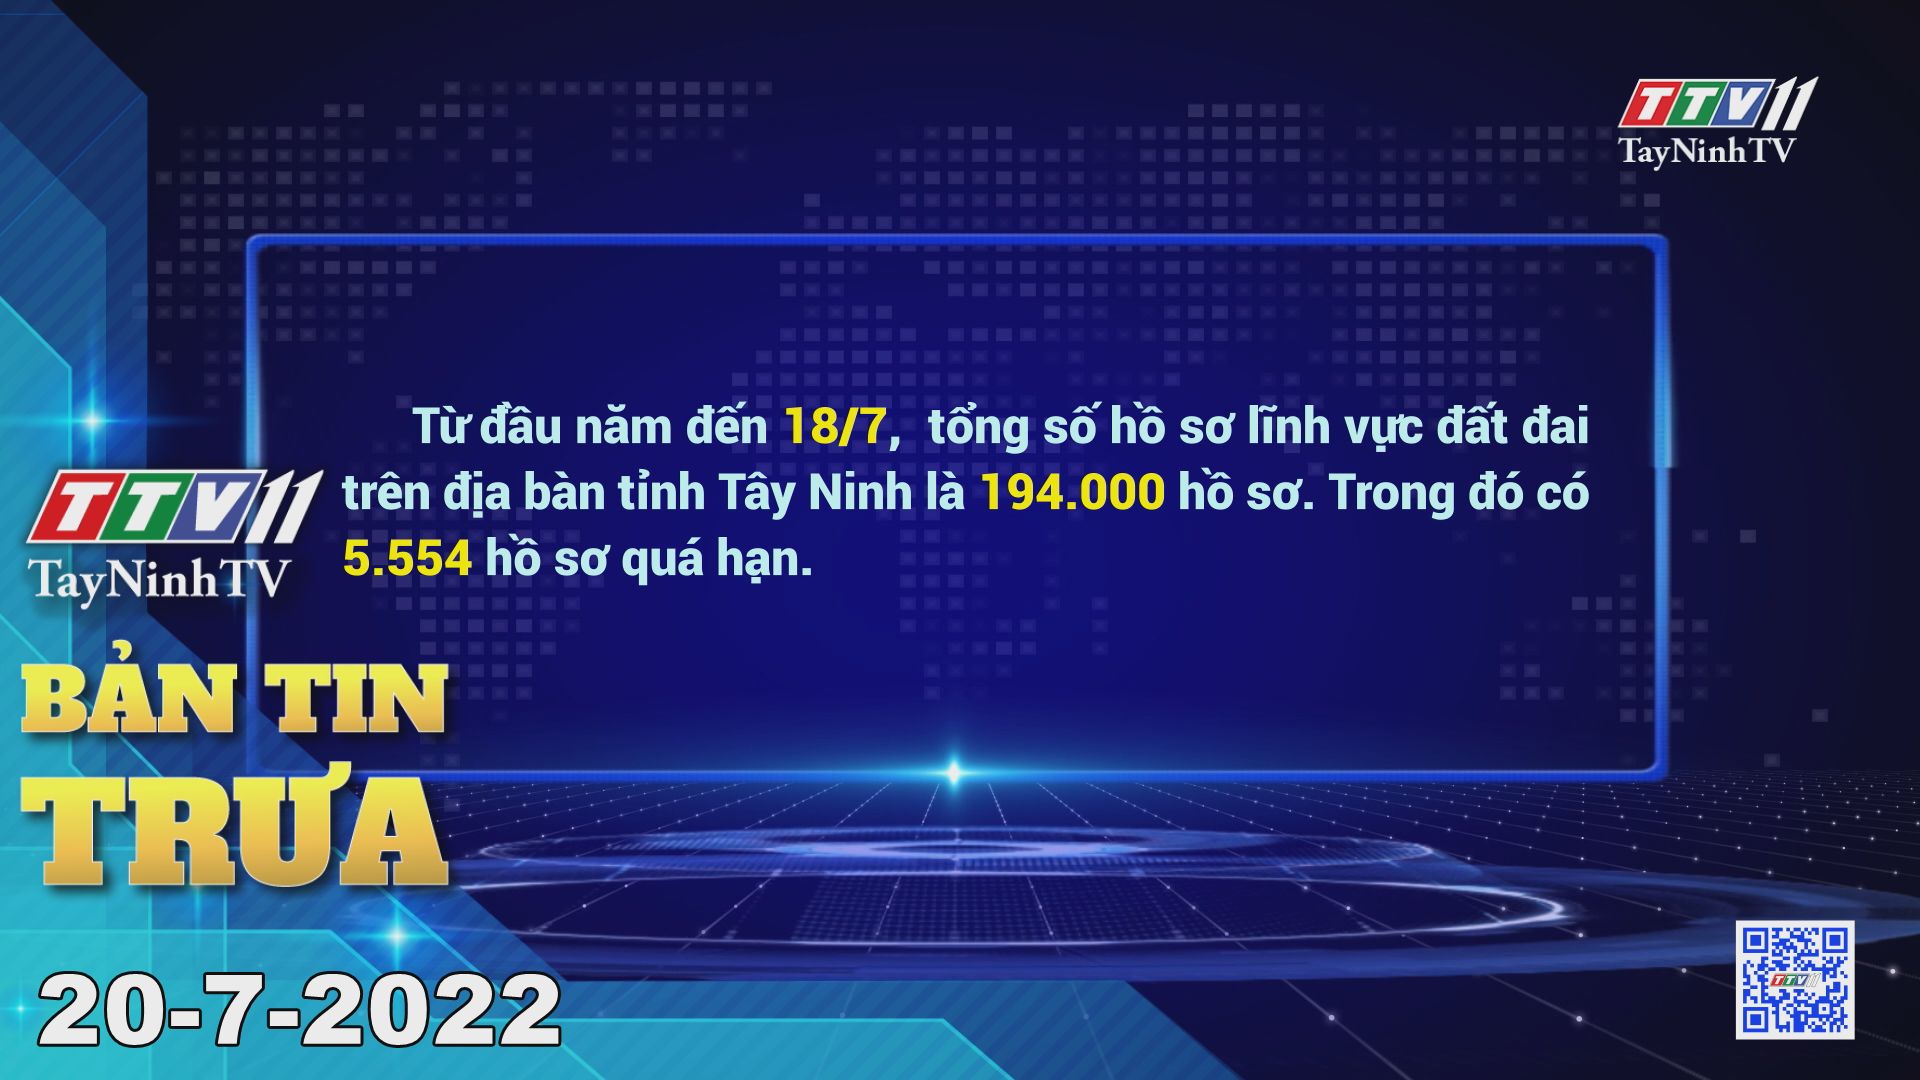 Bản tin trưa 20-7-2022 | Tin tức hôm nay | TayNinhTV